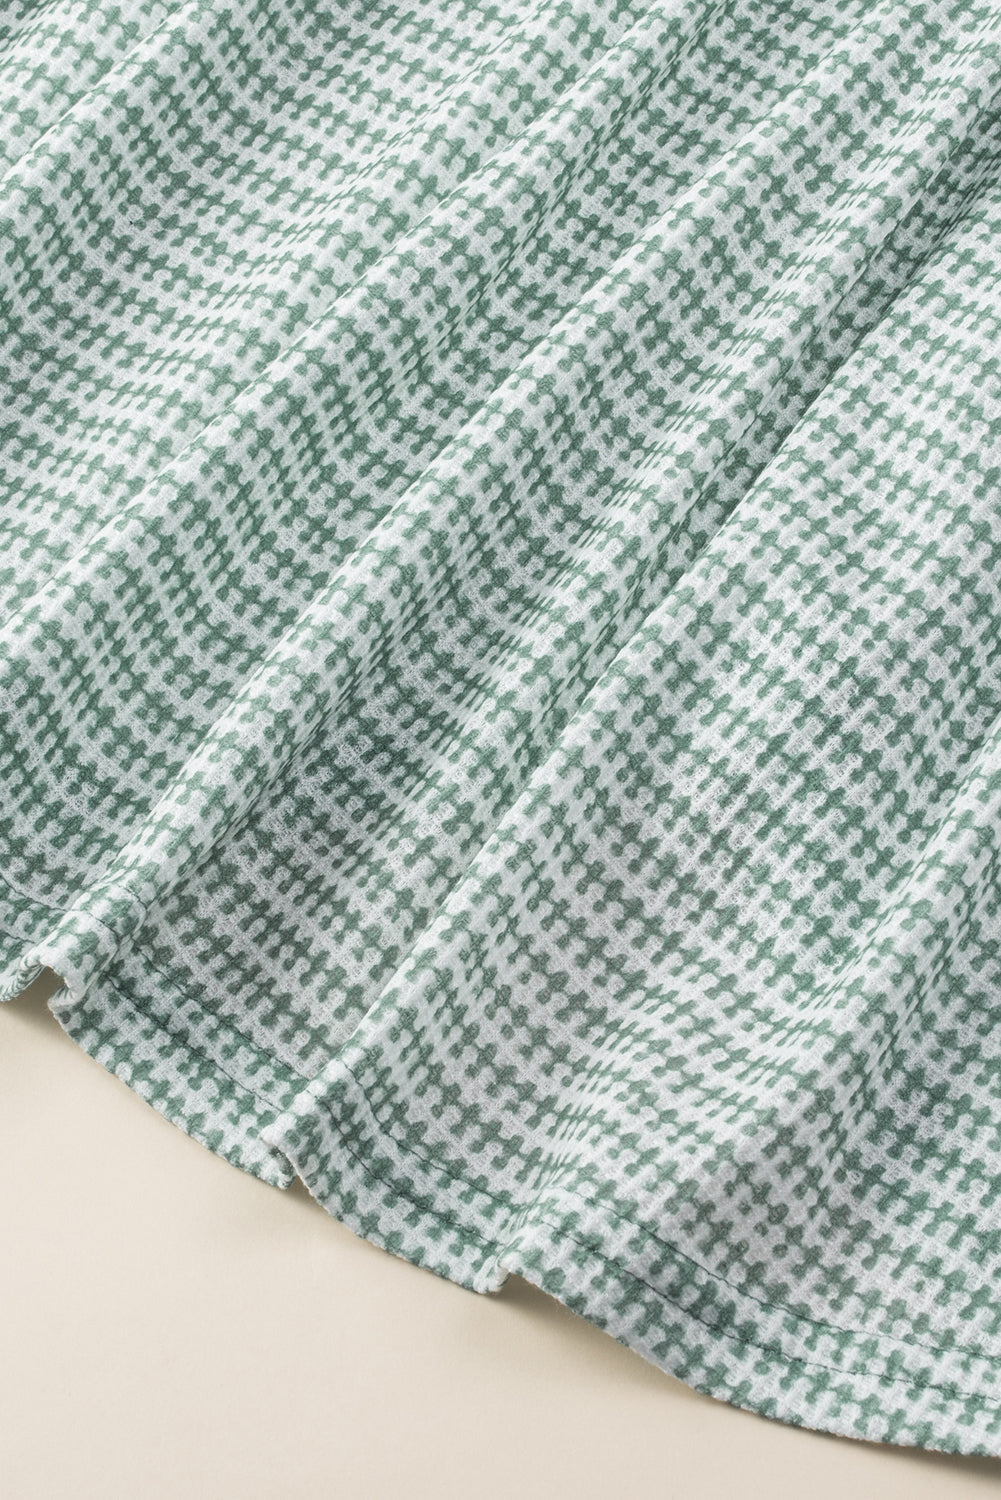 Grass Green Exposed Seam Knit Ruffled Babydoll Top